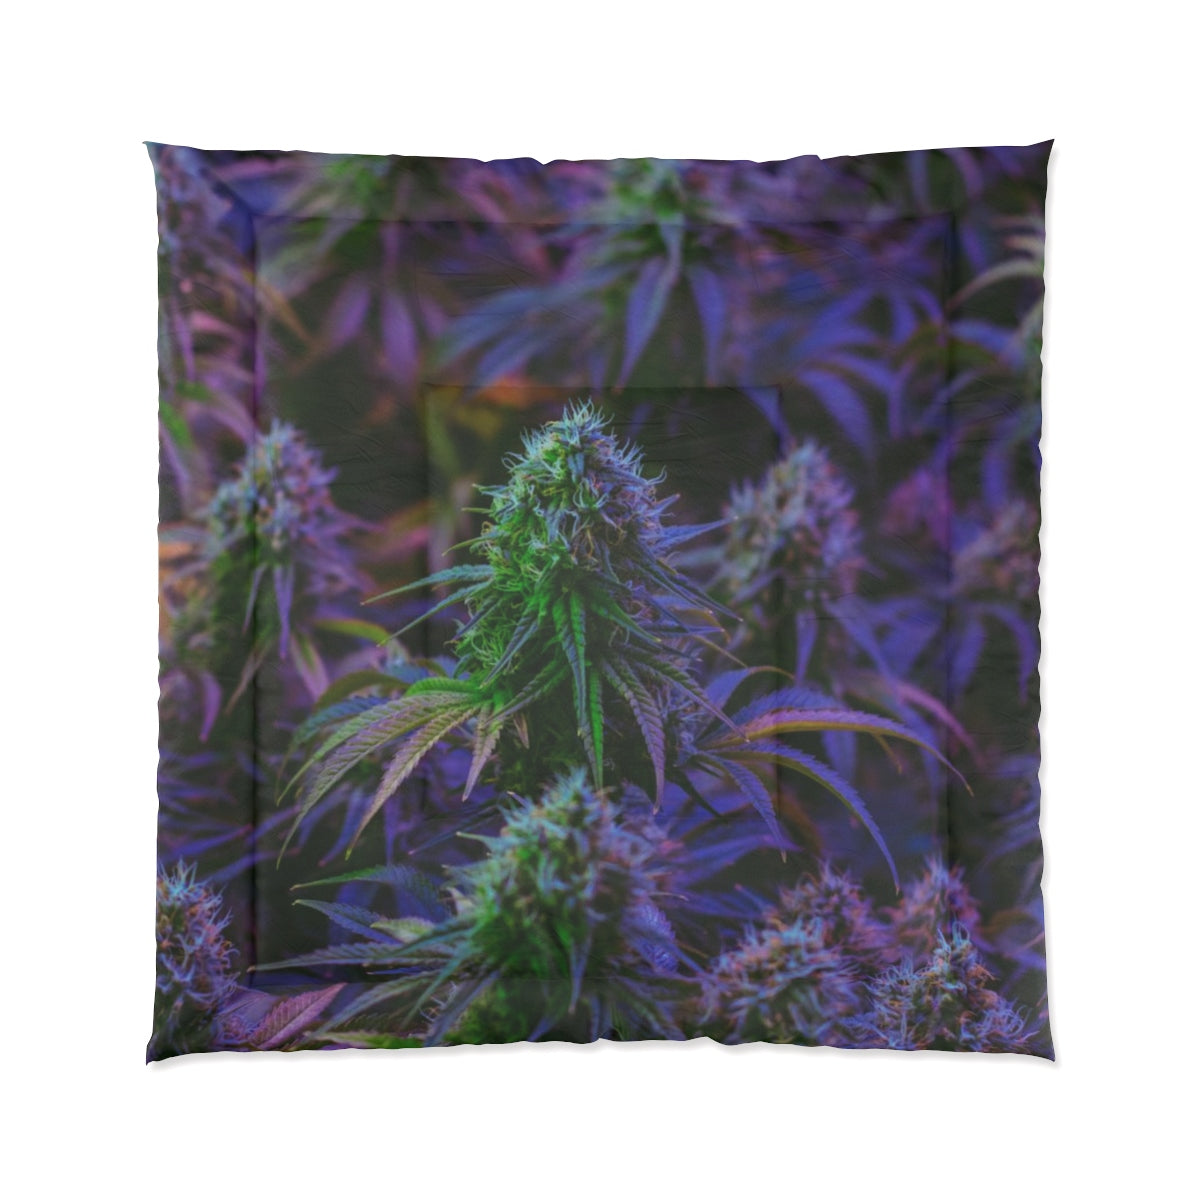 The Purple Cannabis Comforter